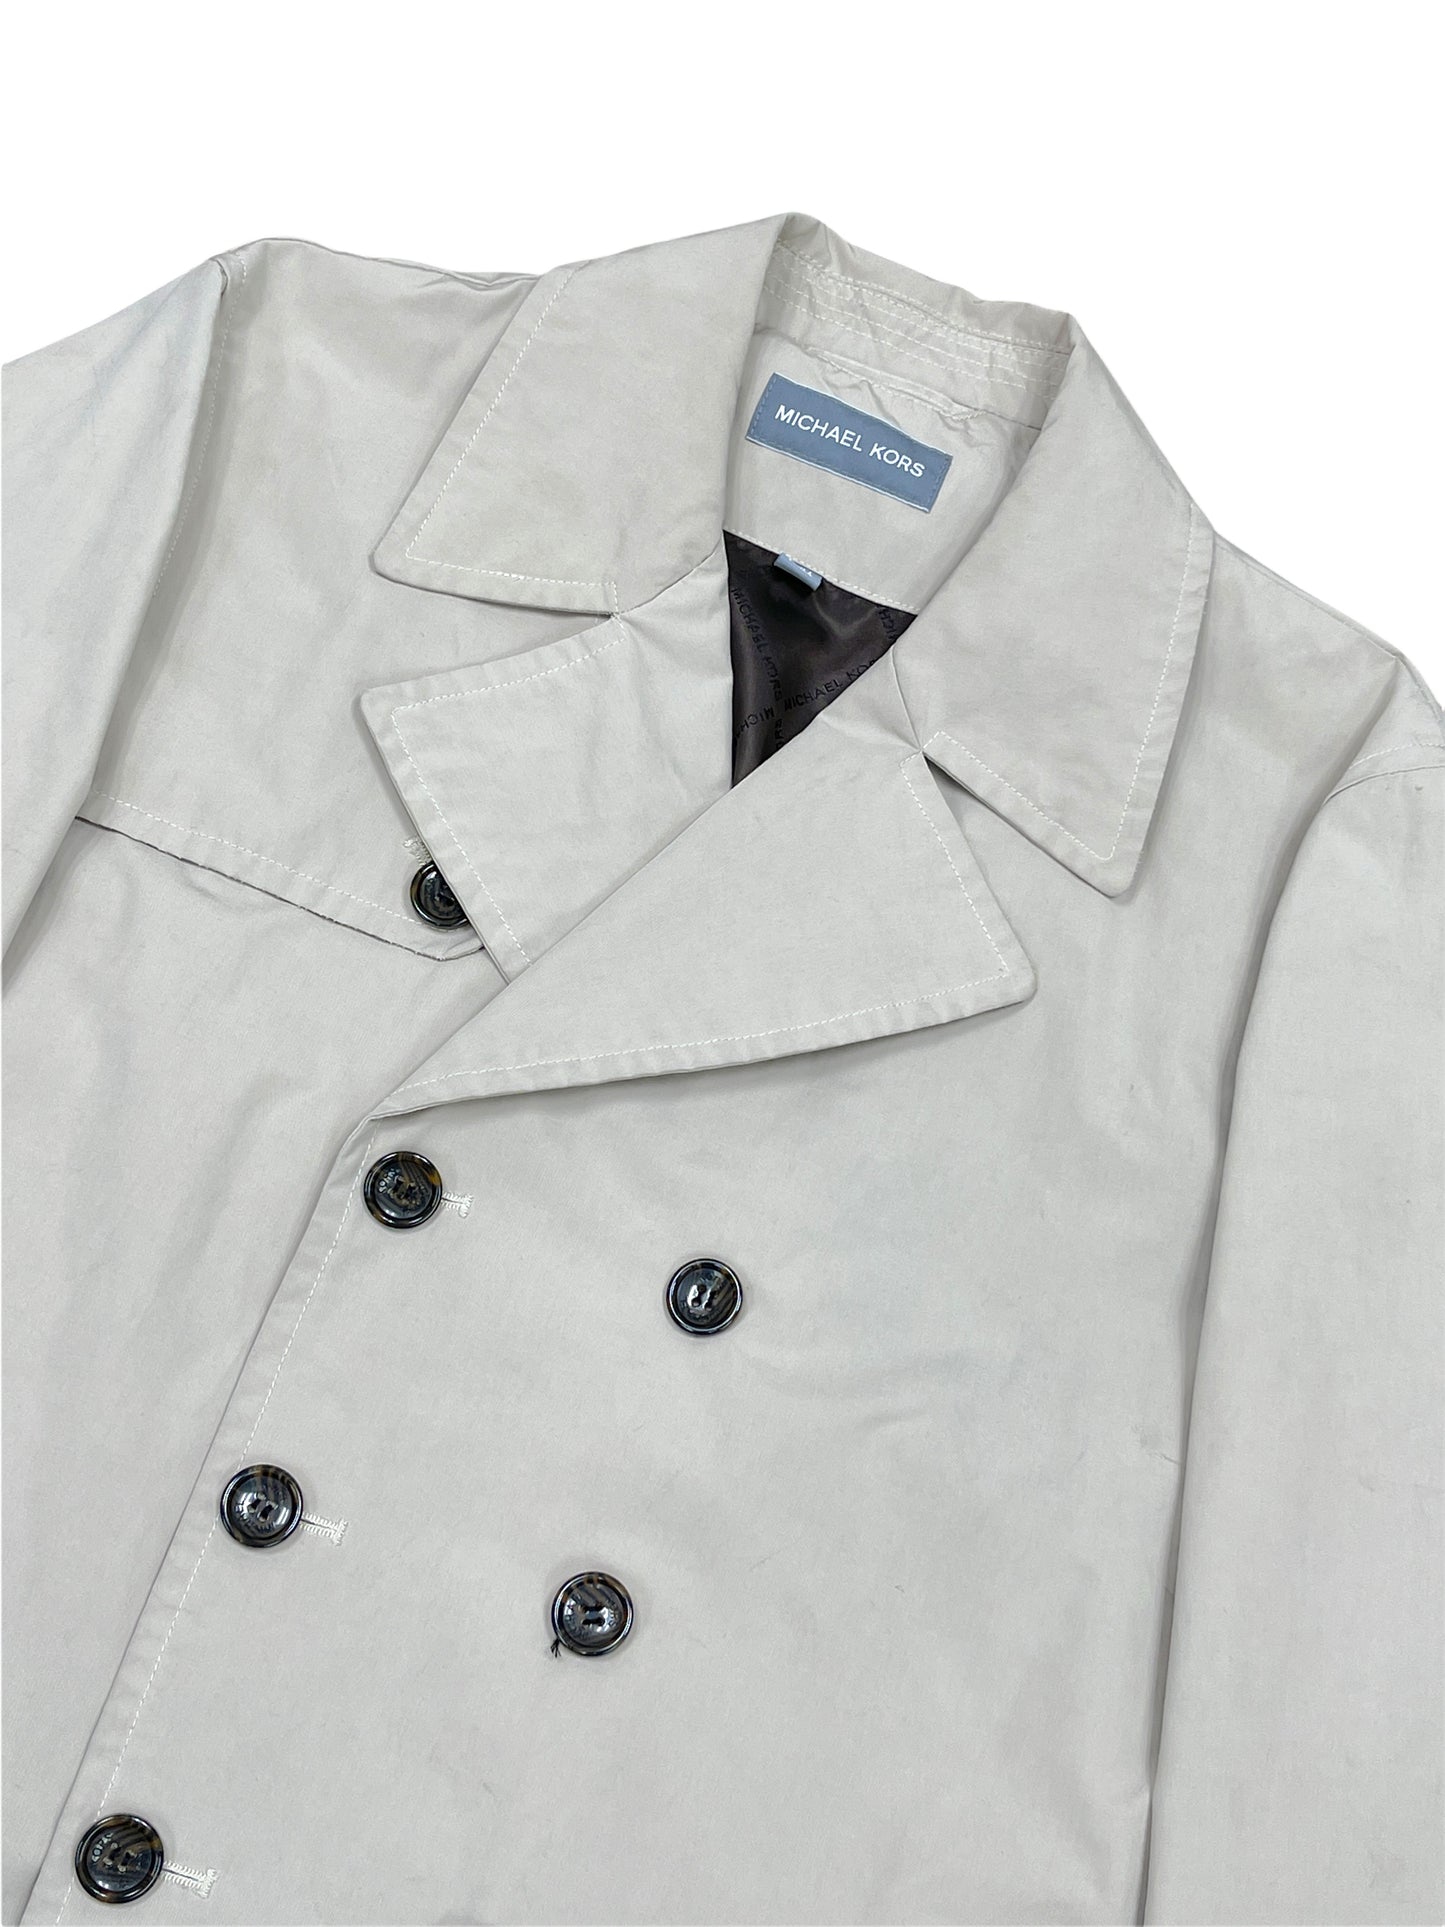 Michael Kors Tan Raincoat Trench Coat Medium - M